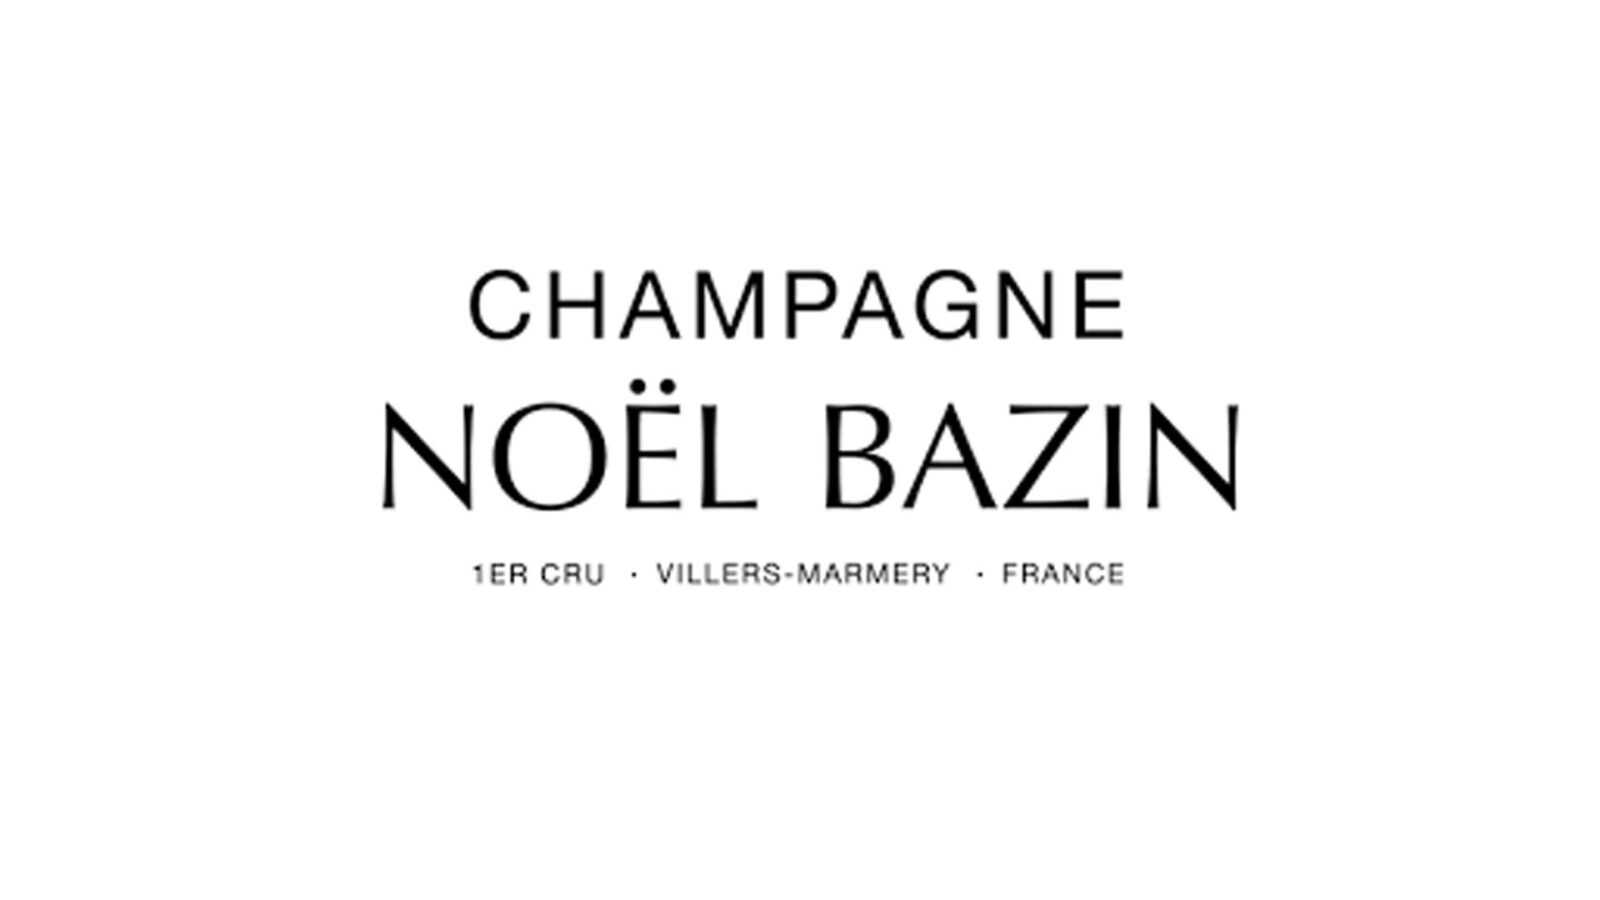 Champagne NOEL BAZIN